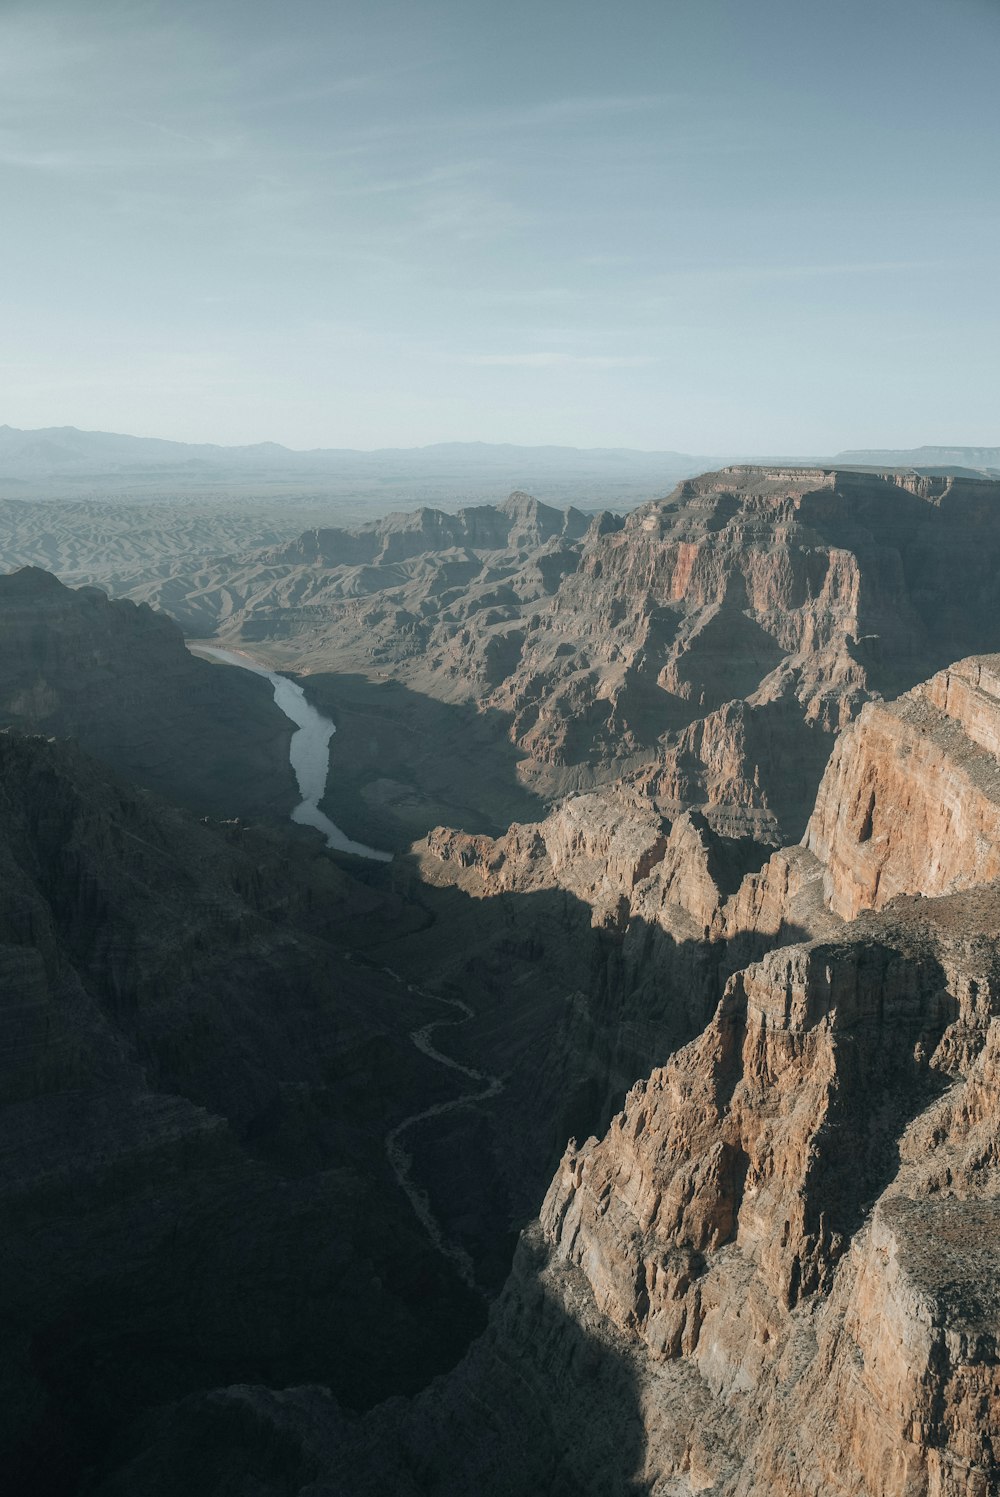 Una vista panoramica di un fiume in un canyon